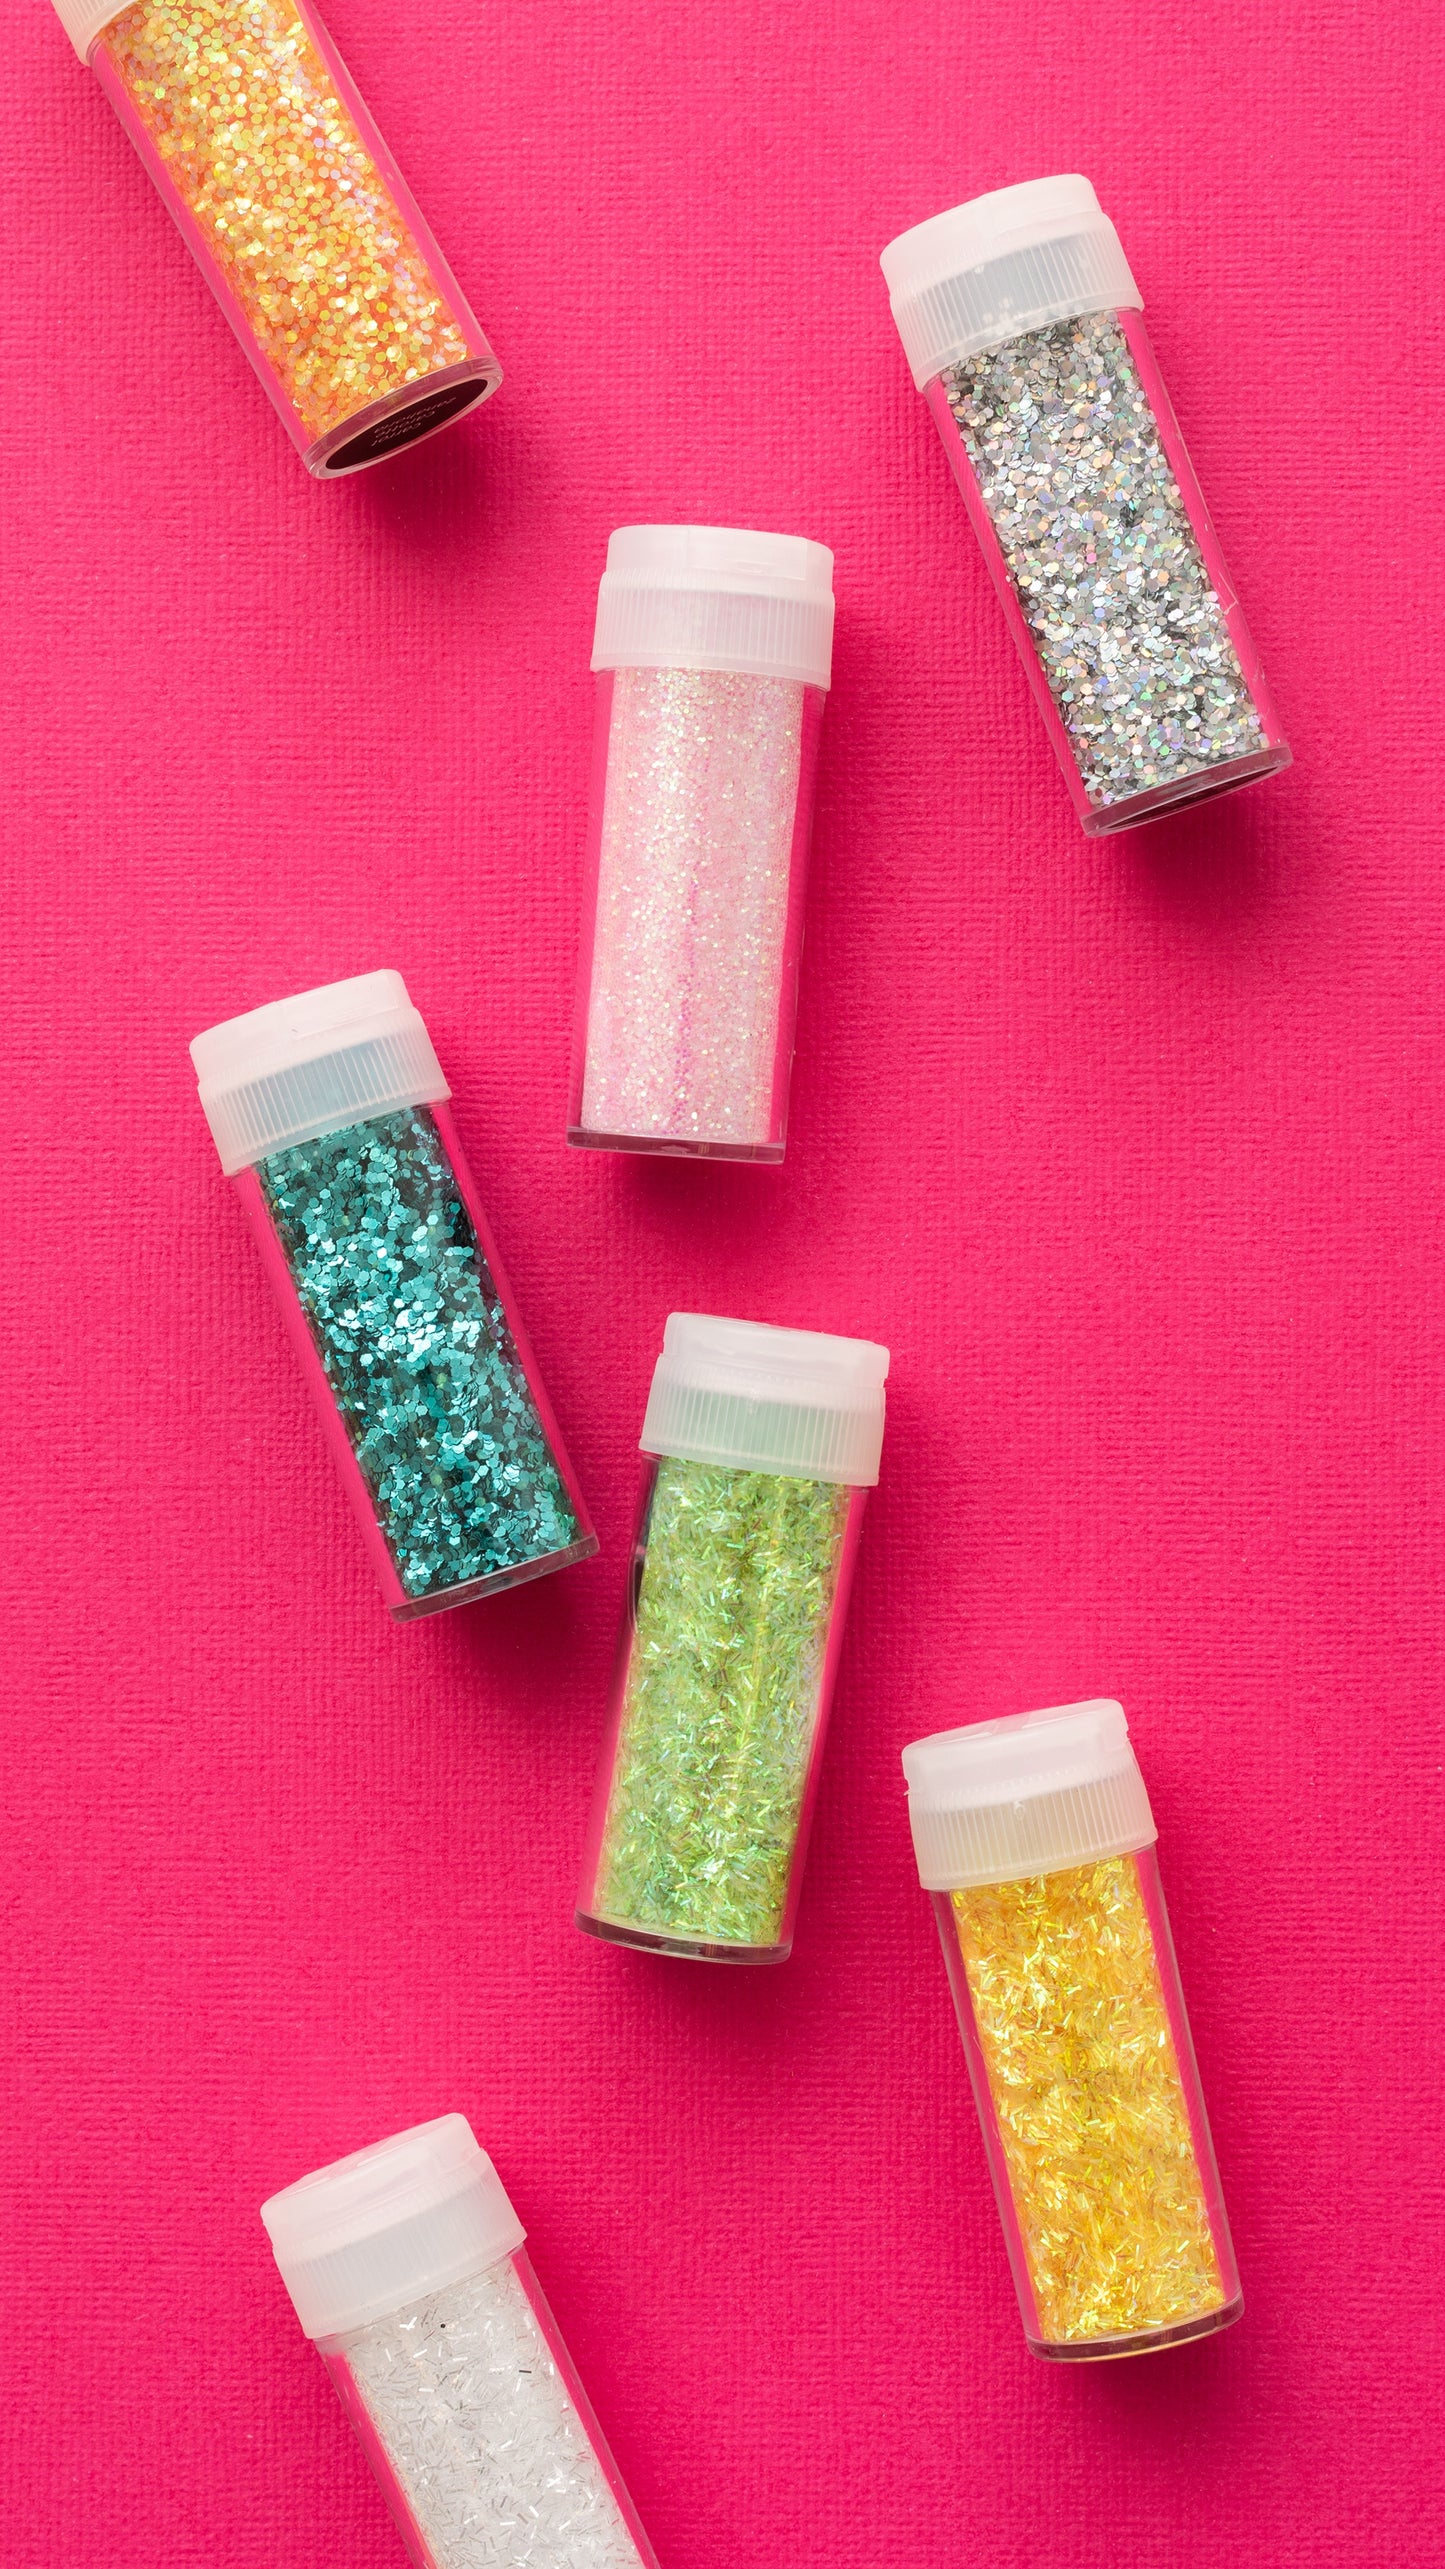 Moxy Tinsel & Extra Fine Glitter 24/Pkg-Candy Shop